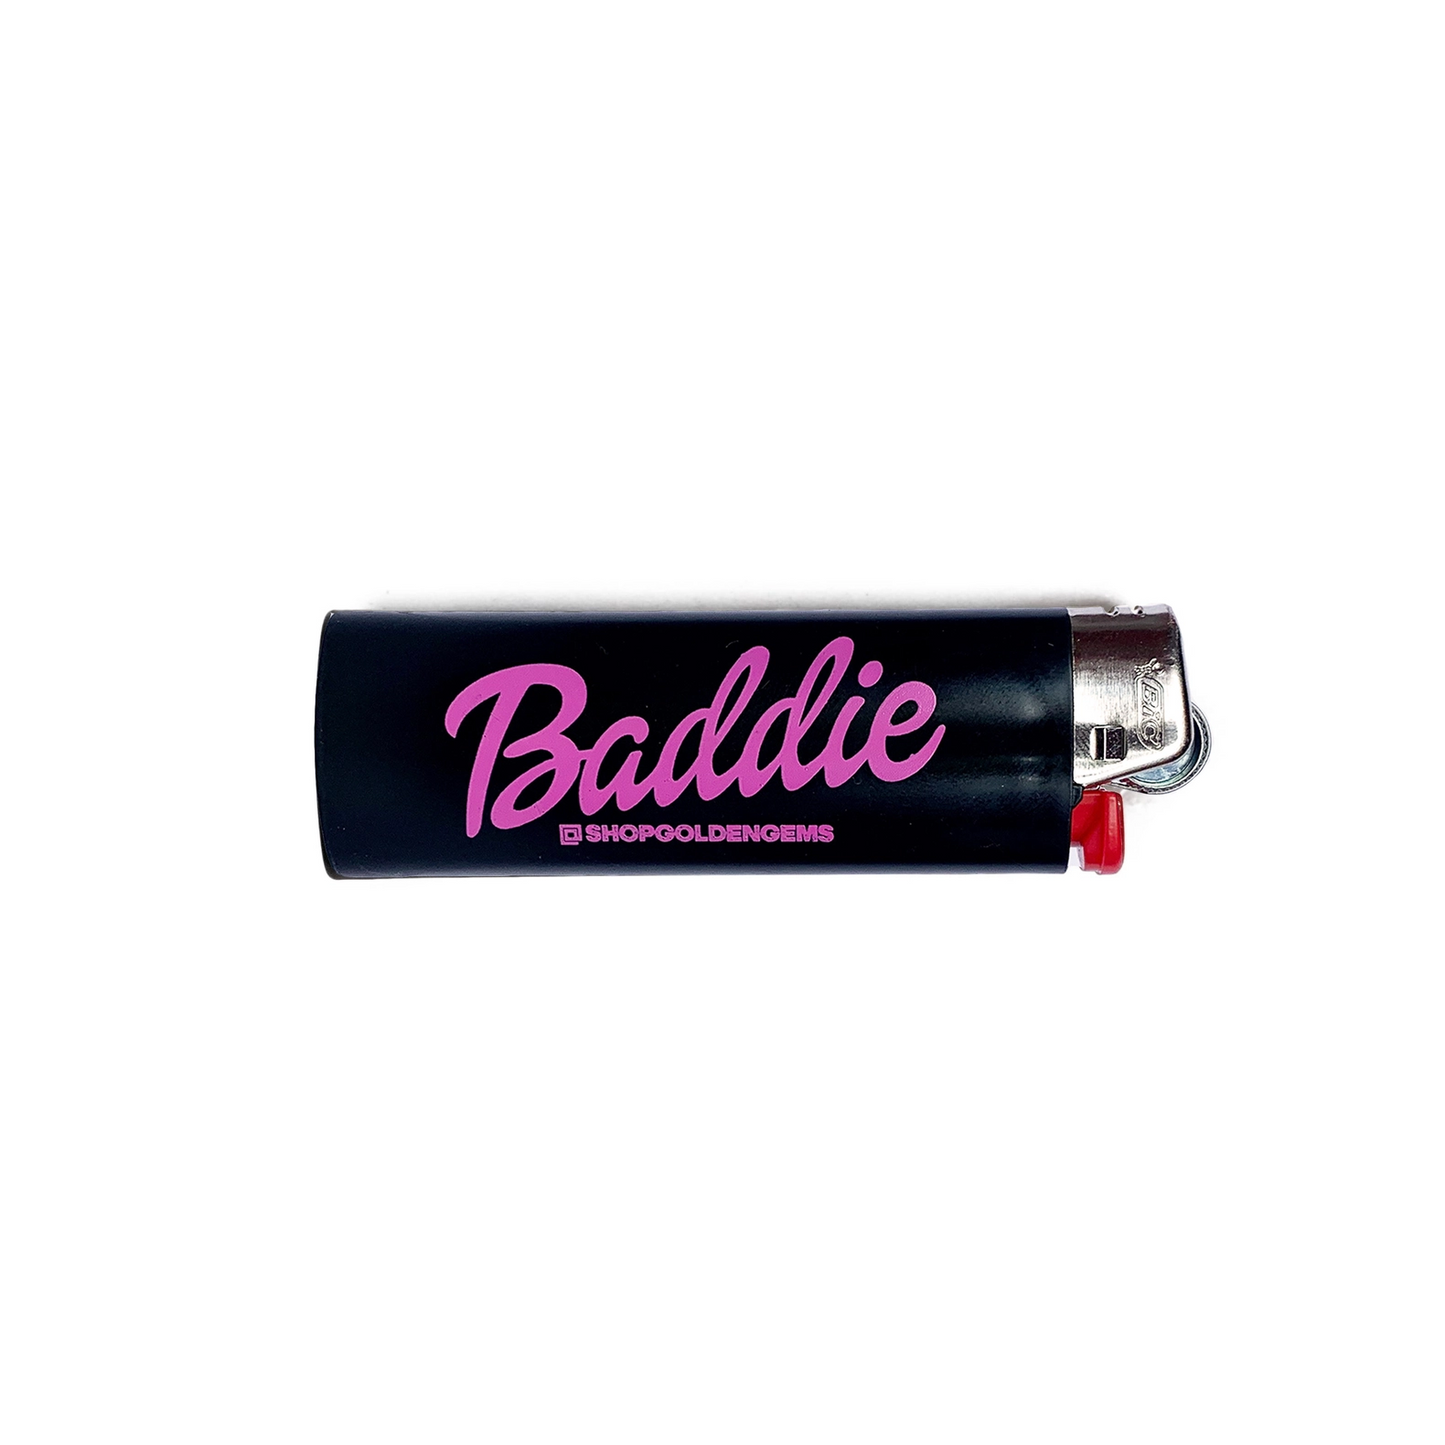 Baddie Lighter